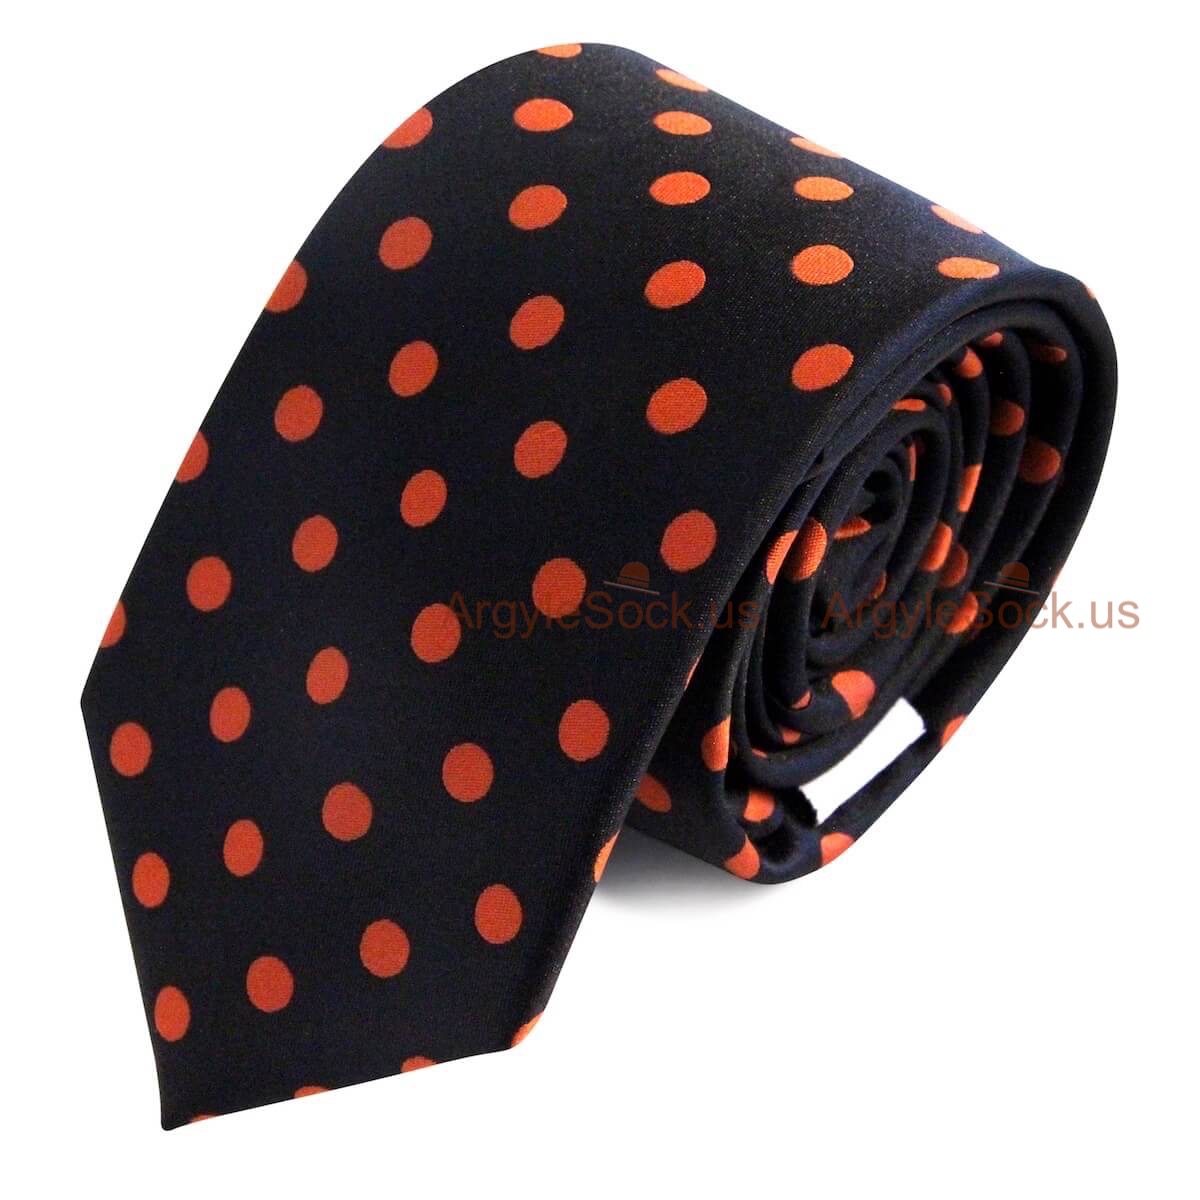 Black and Orange Dots Groomsmen/Costume Necktie